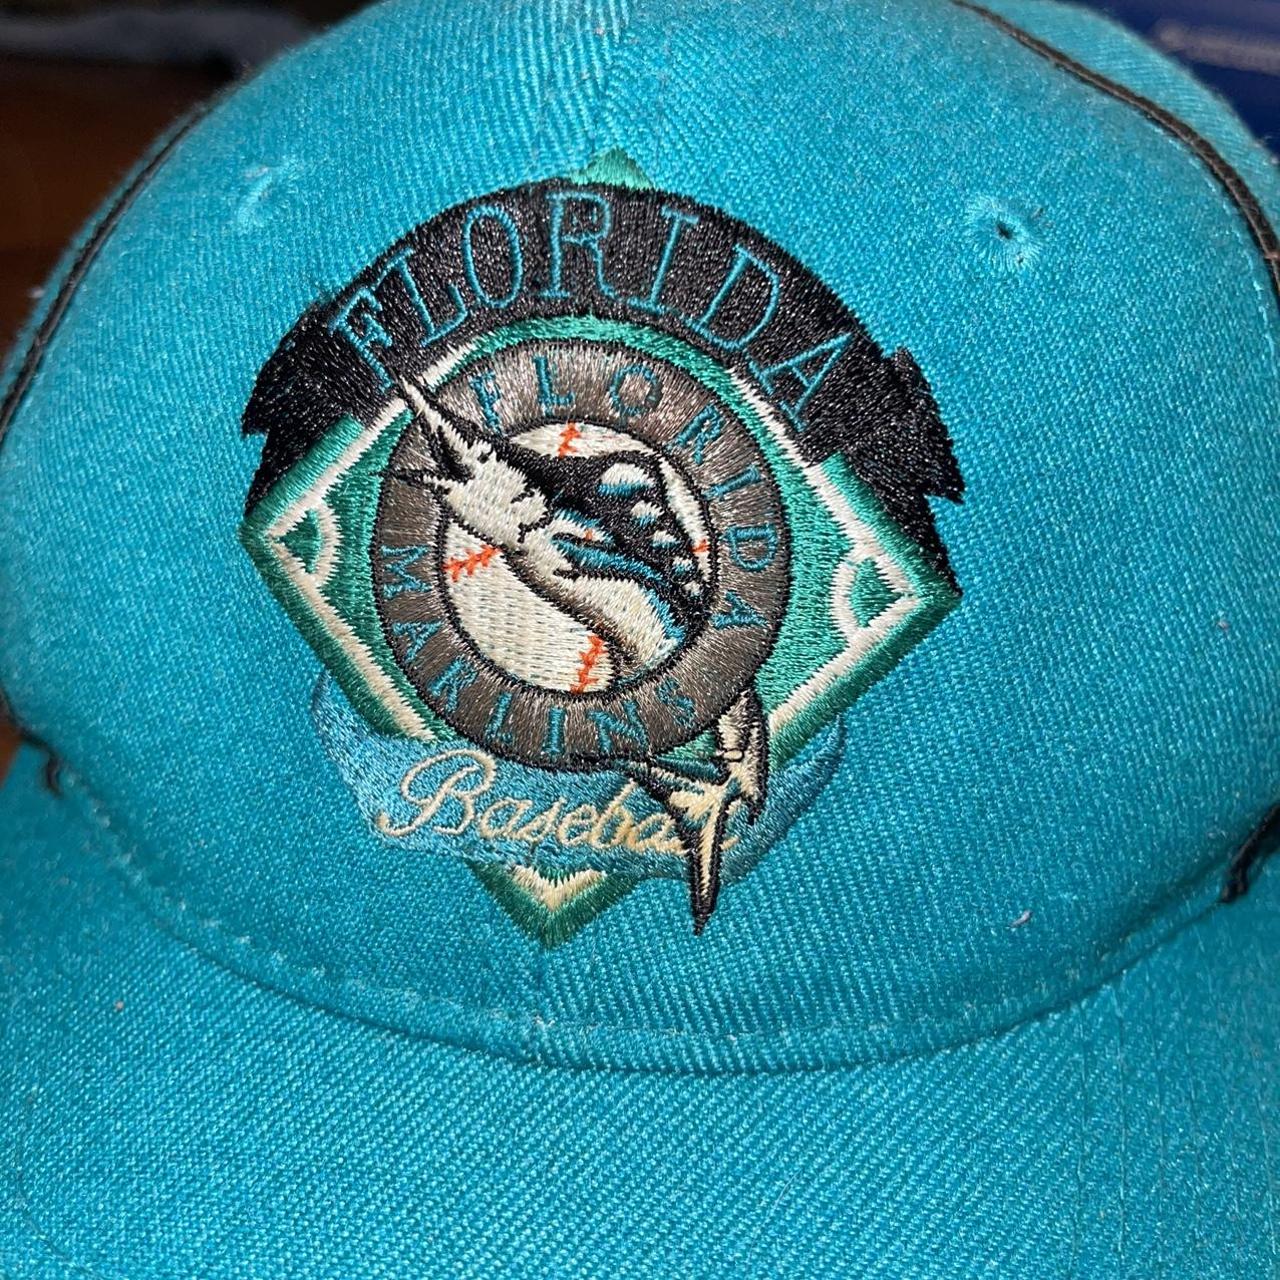 Product Image 3 - 90s Florida Marlins Hat VINTAGE

Size/fitting: